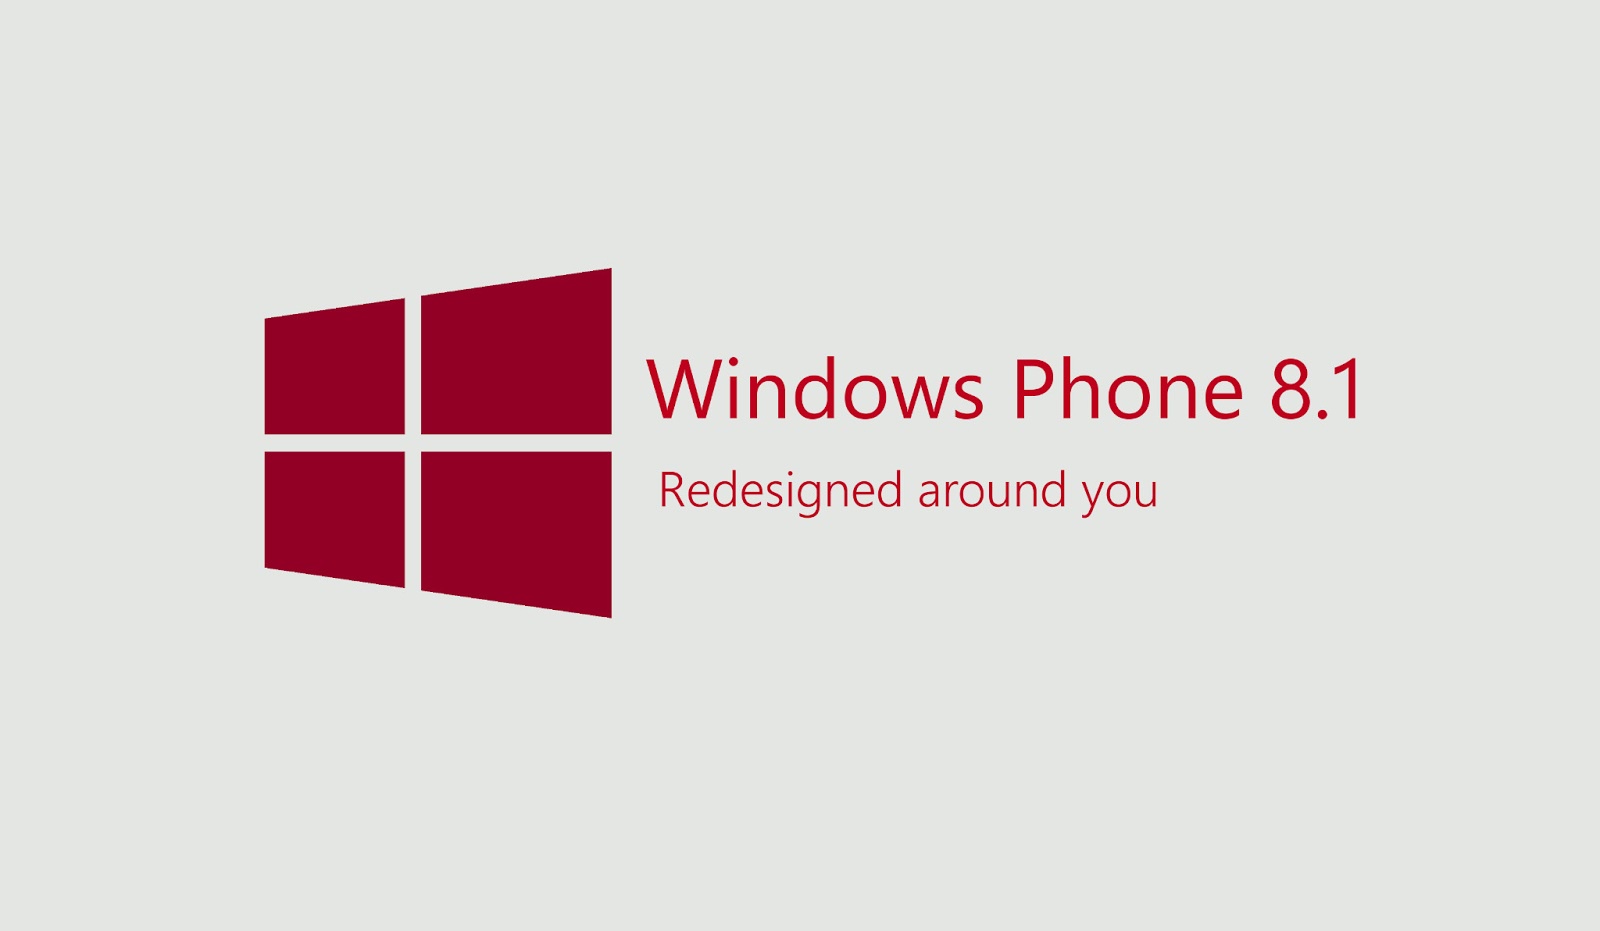 Windows Phone 8.1 Blue Concepts1 | Windows Phone 8.1 | วิดีโอสาธิตการใช้งานระบบ Windows phone 8.1 บน Nokia Lumia 920 พร้อมรายละเอียดเพิ่มเติมคุณสมบัติใหม่ๆ